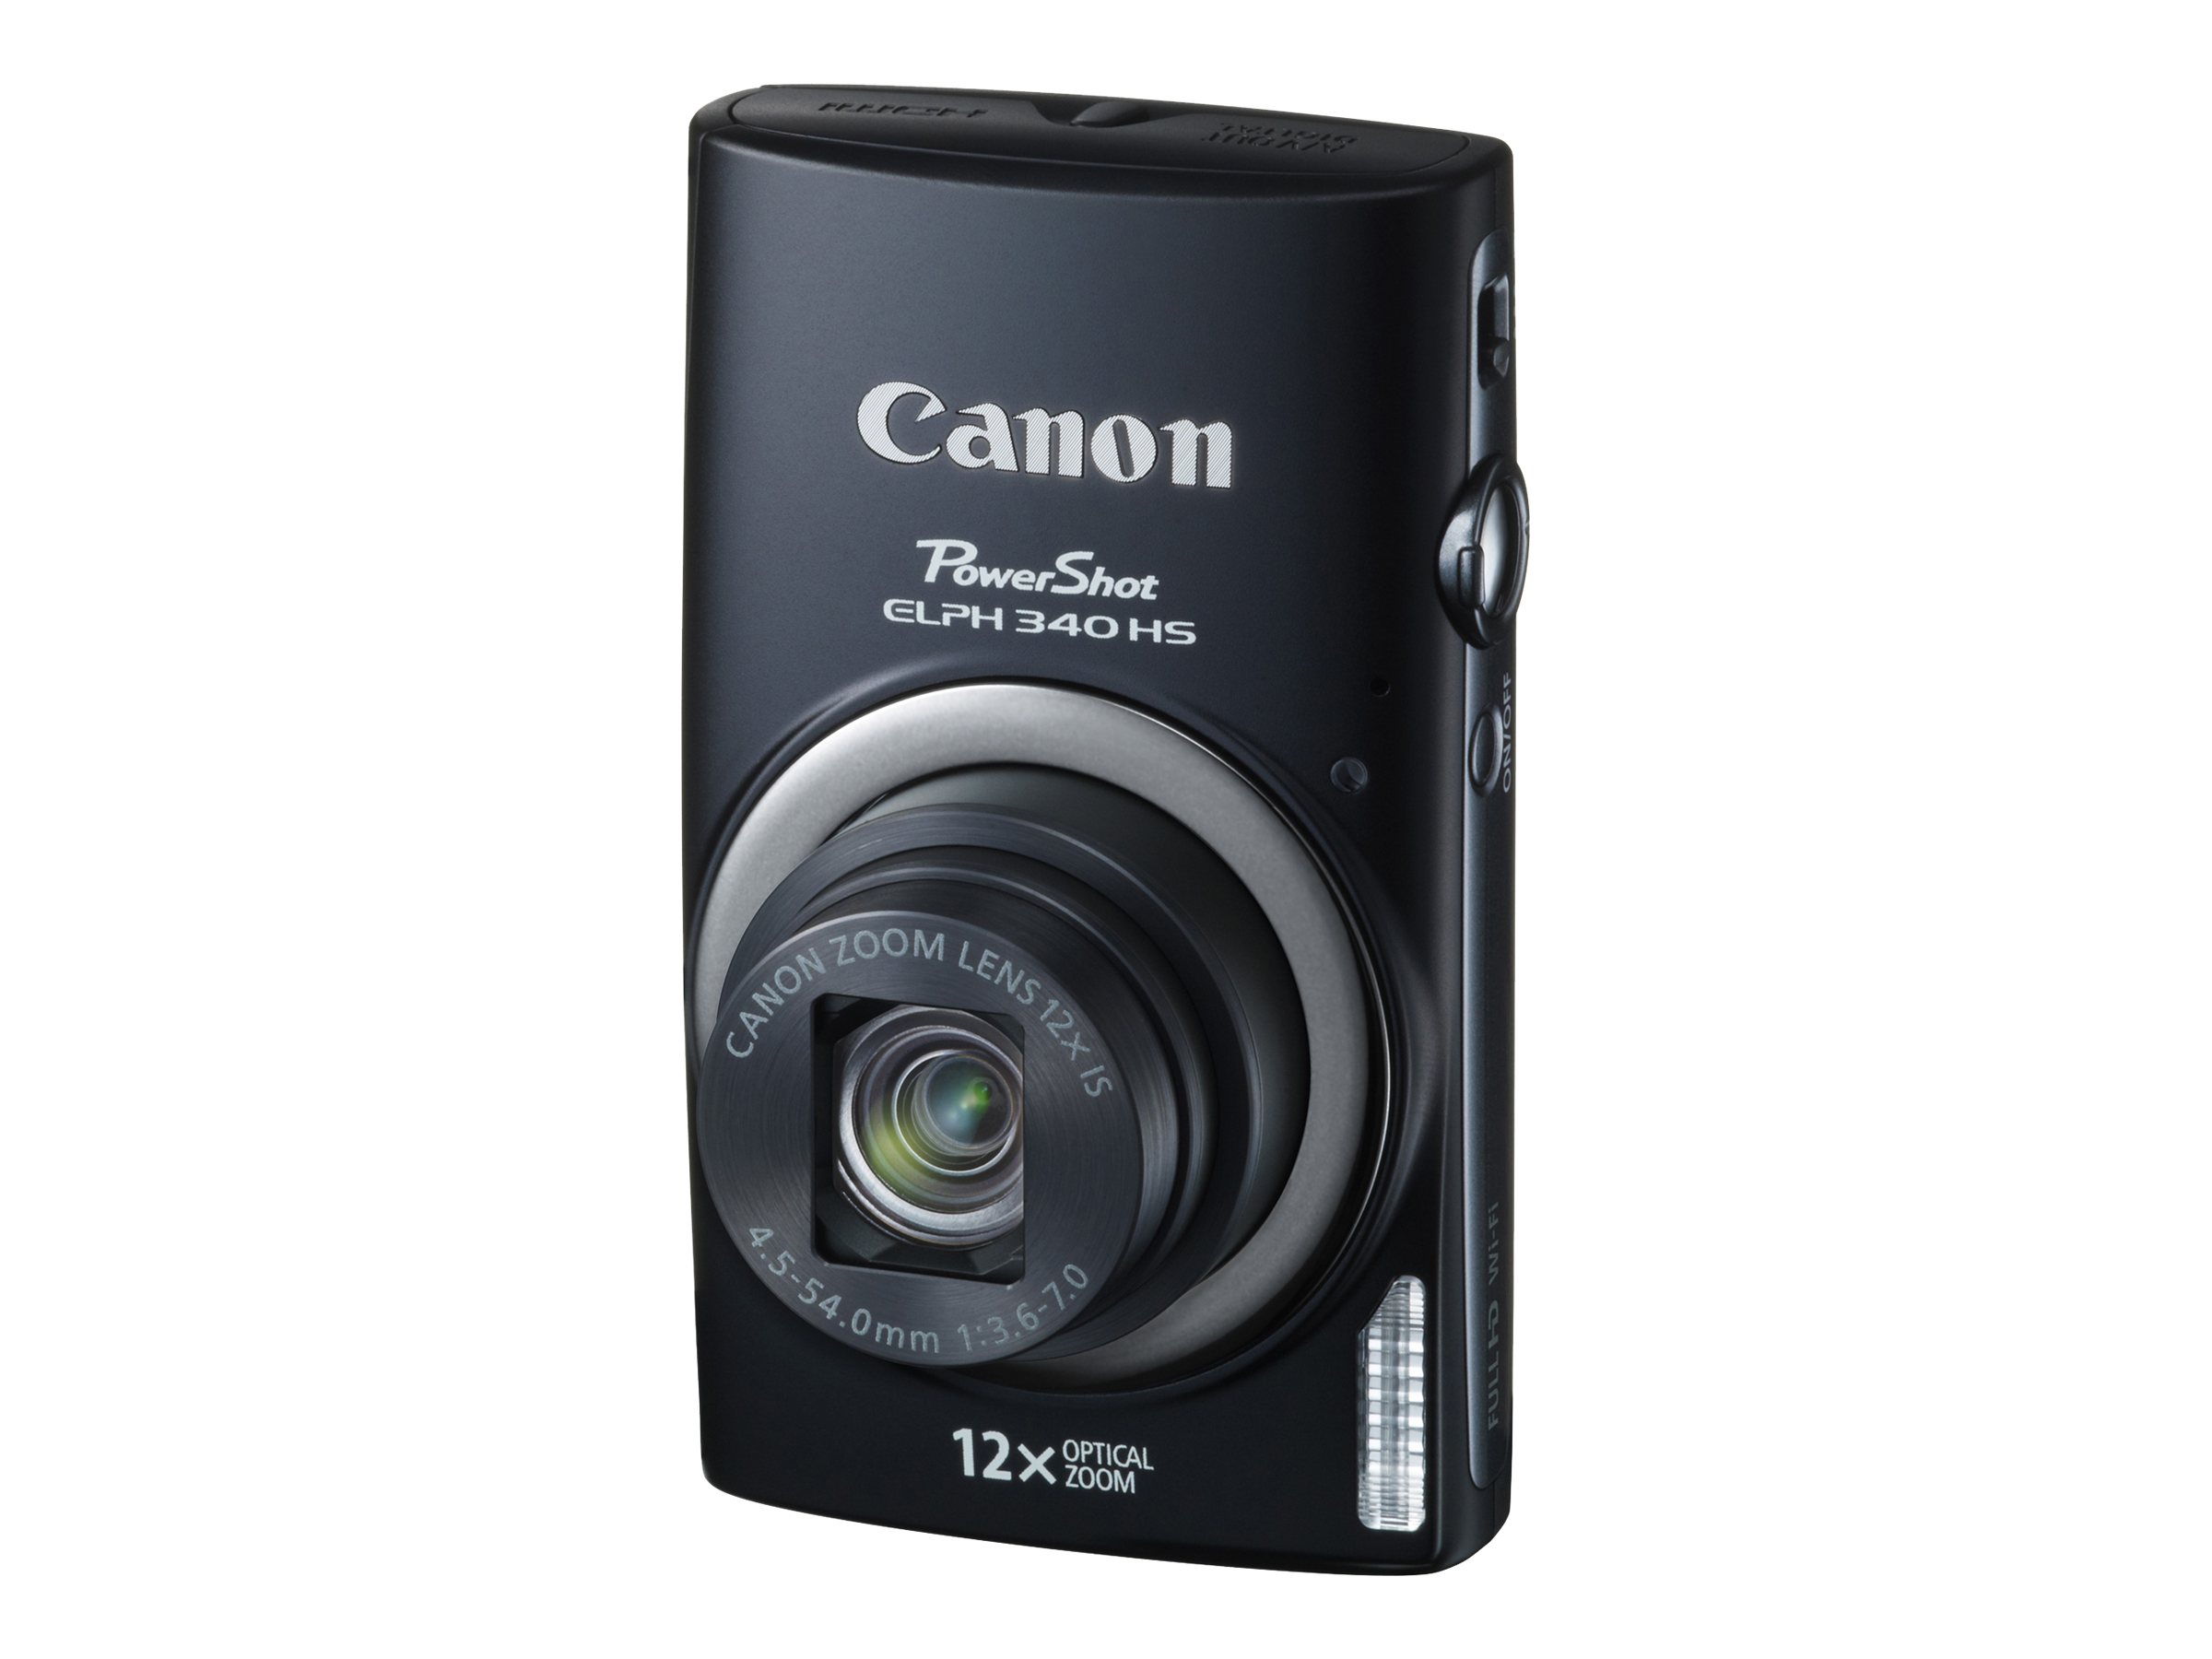 Canon PowerShot ELPH 340 HS - Digital camera - compact - 16.0 MP - 1080p - 12x optical zoom - Wireless LAN - black - image 1 of 4